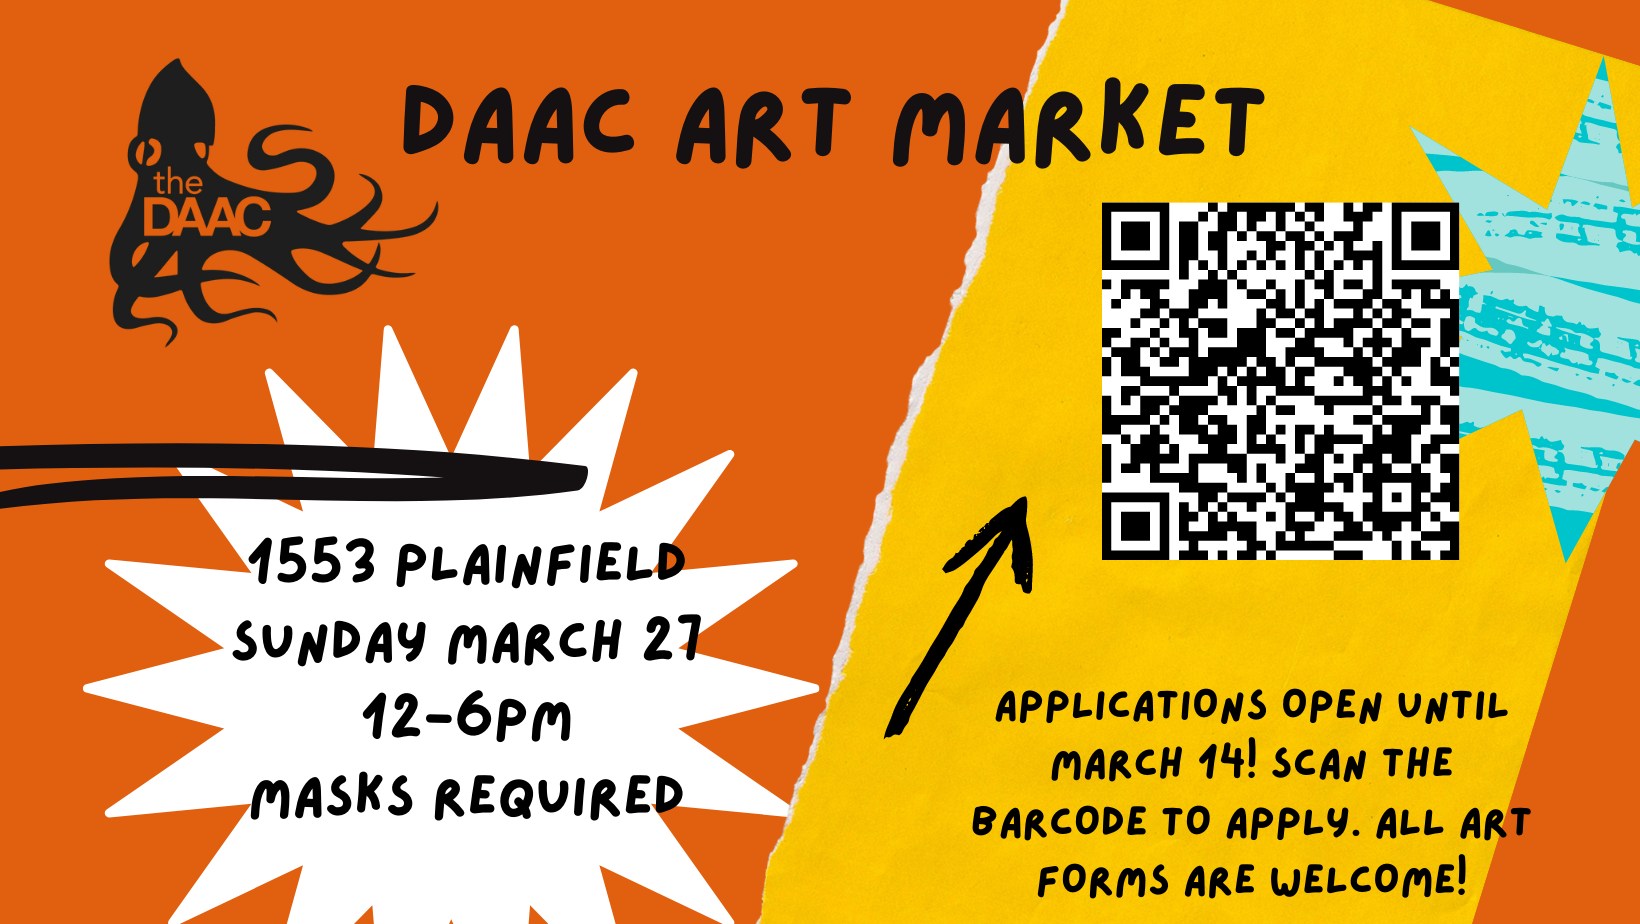 DAAC Art Market info plus QR code to the artist application form